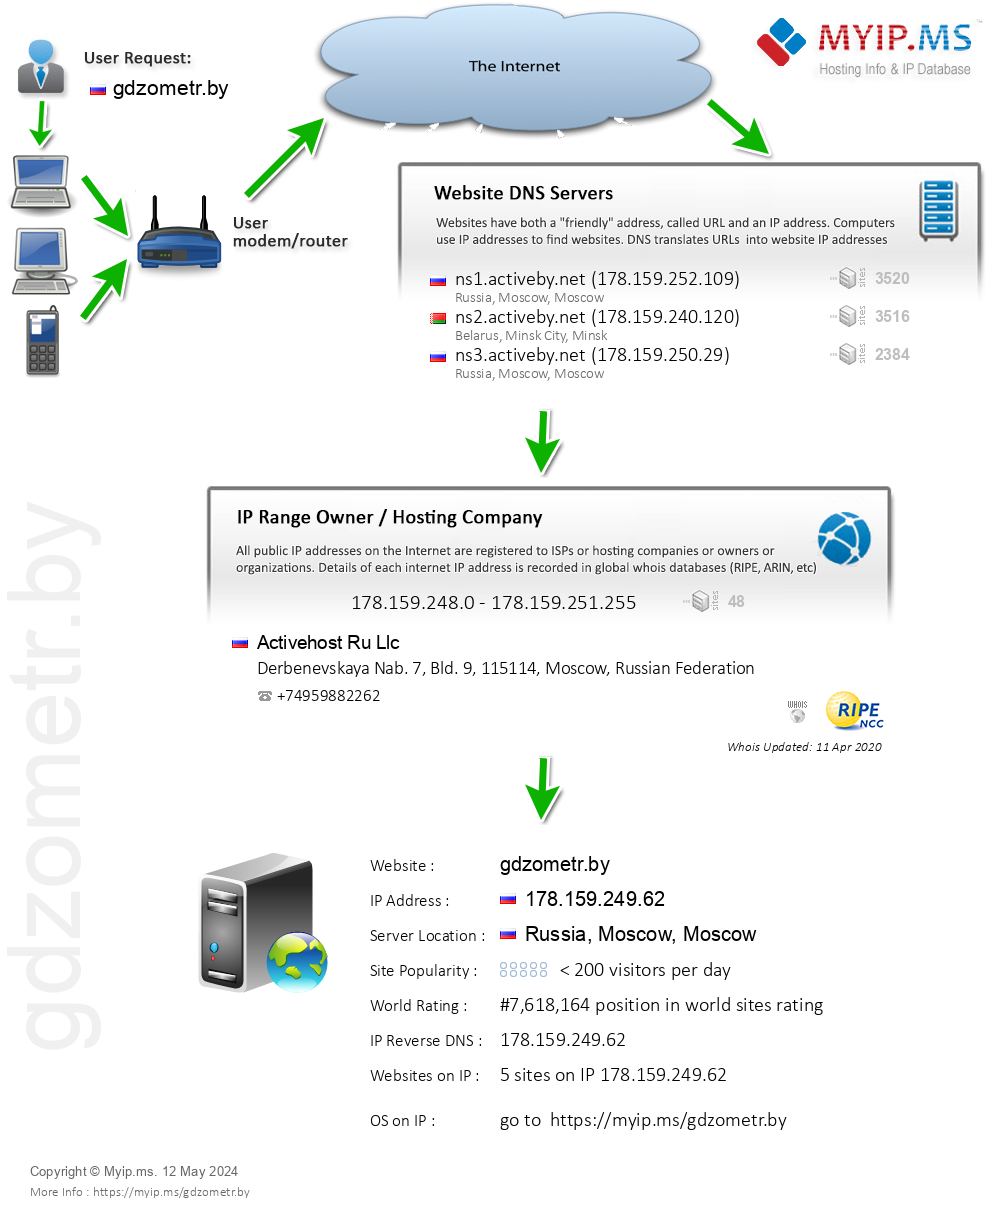 Gdzometr.by - Website Hosting Visual IP Diagram